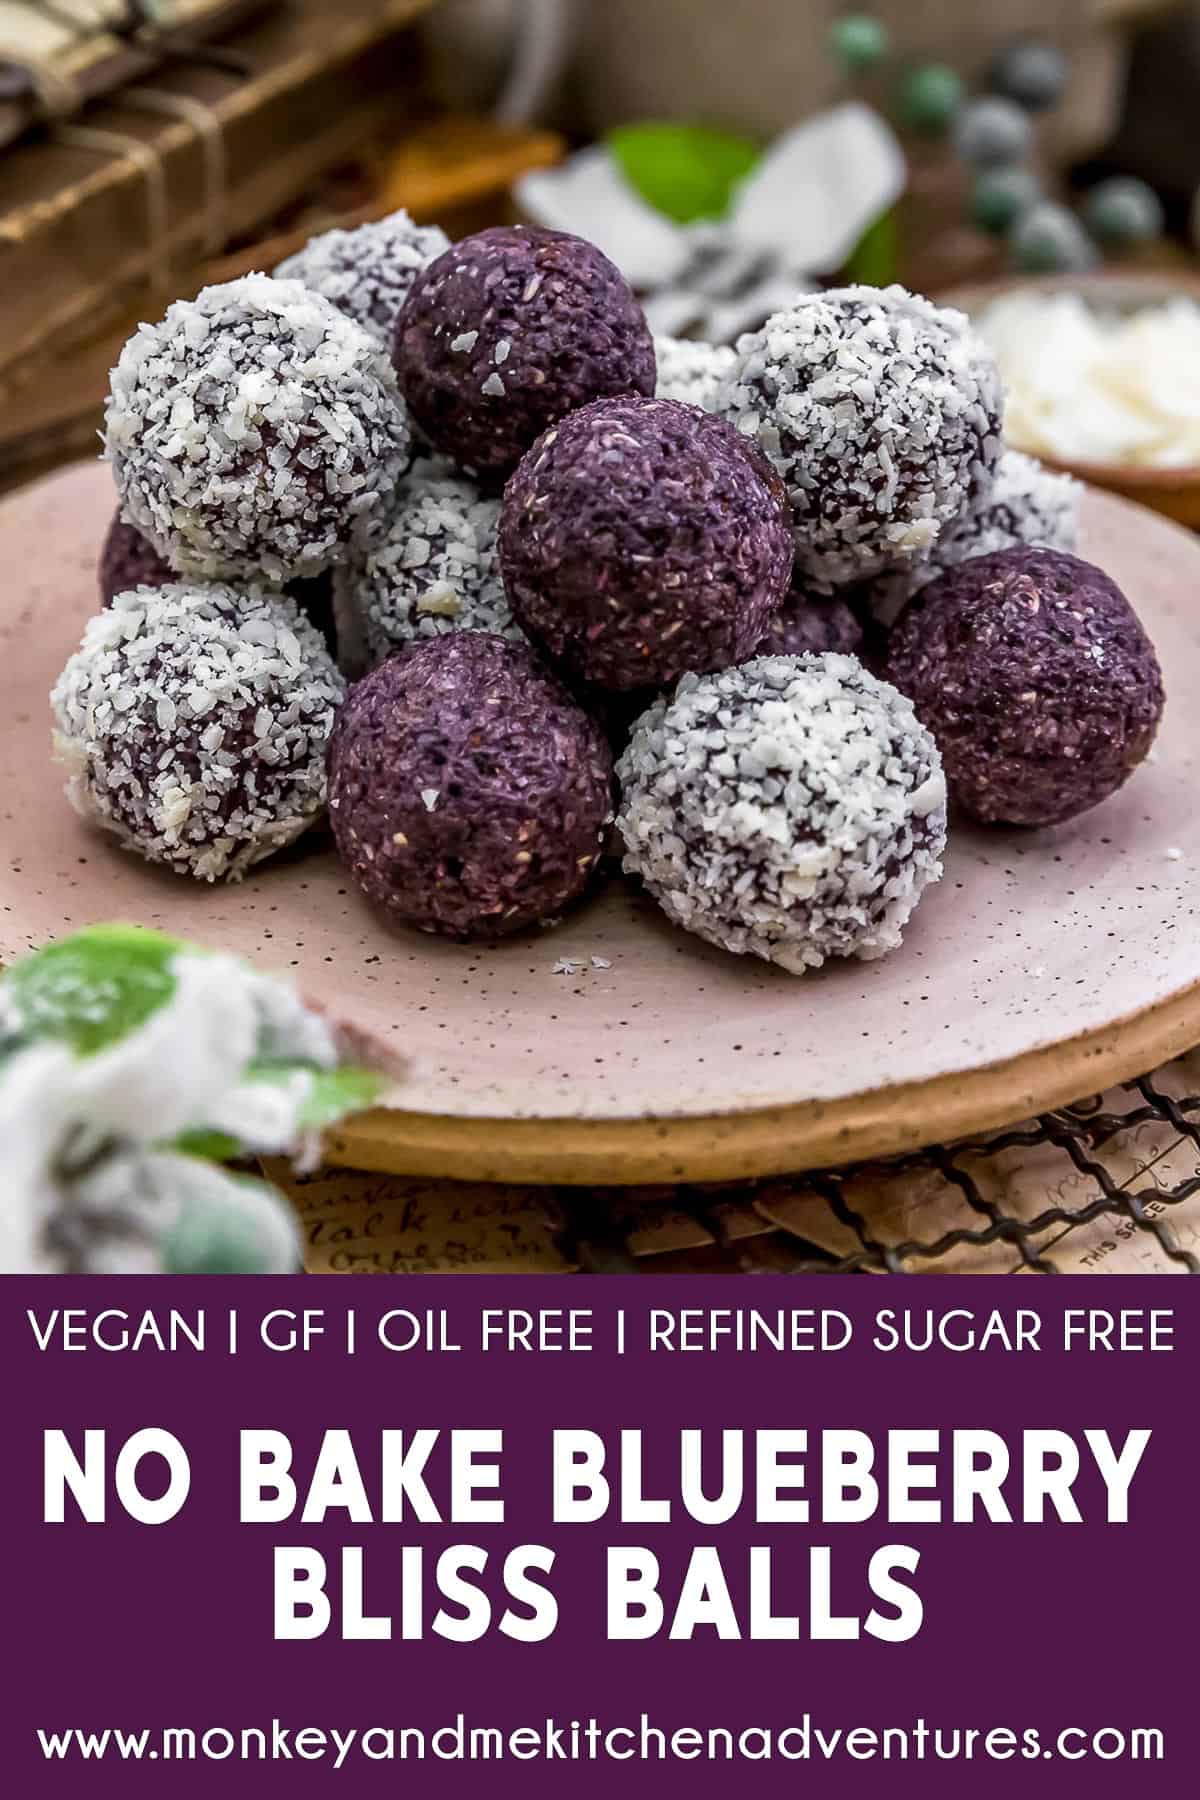 No Bake Blueberry Bliss Balls with text description